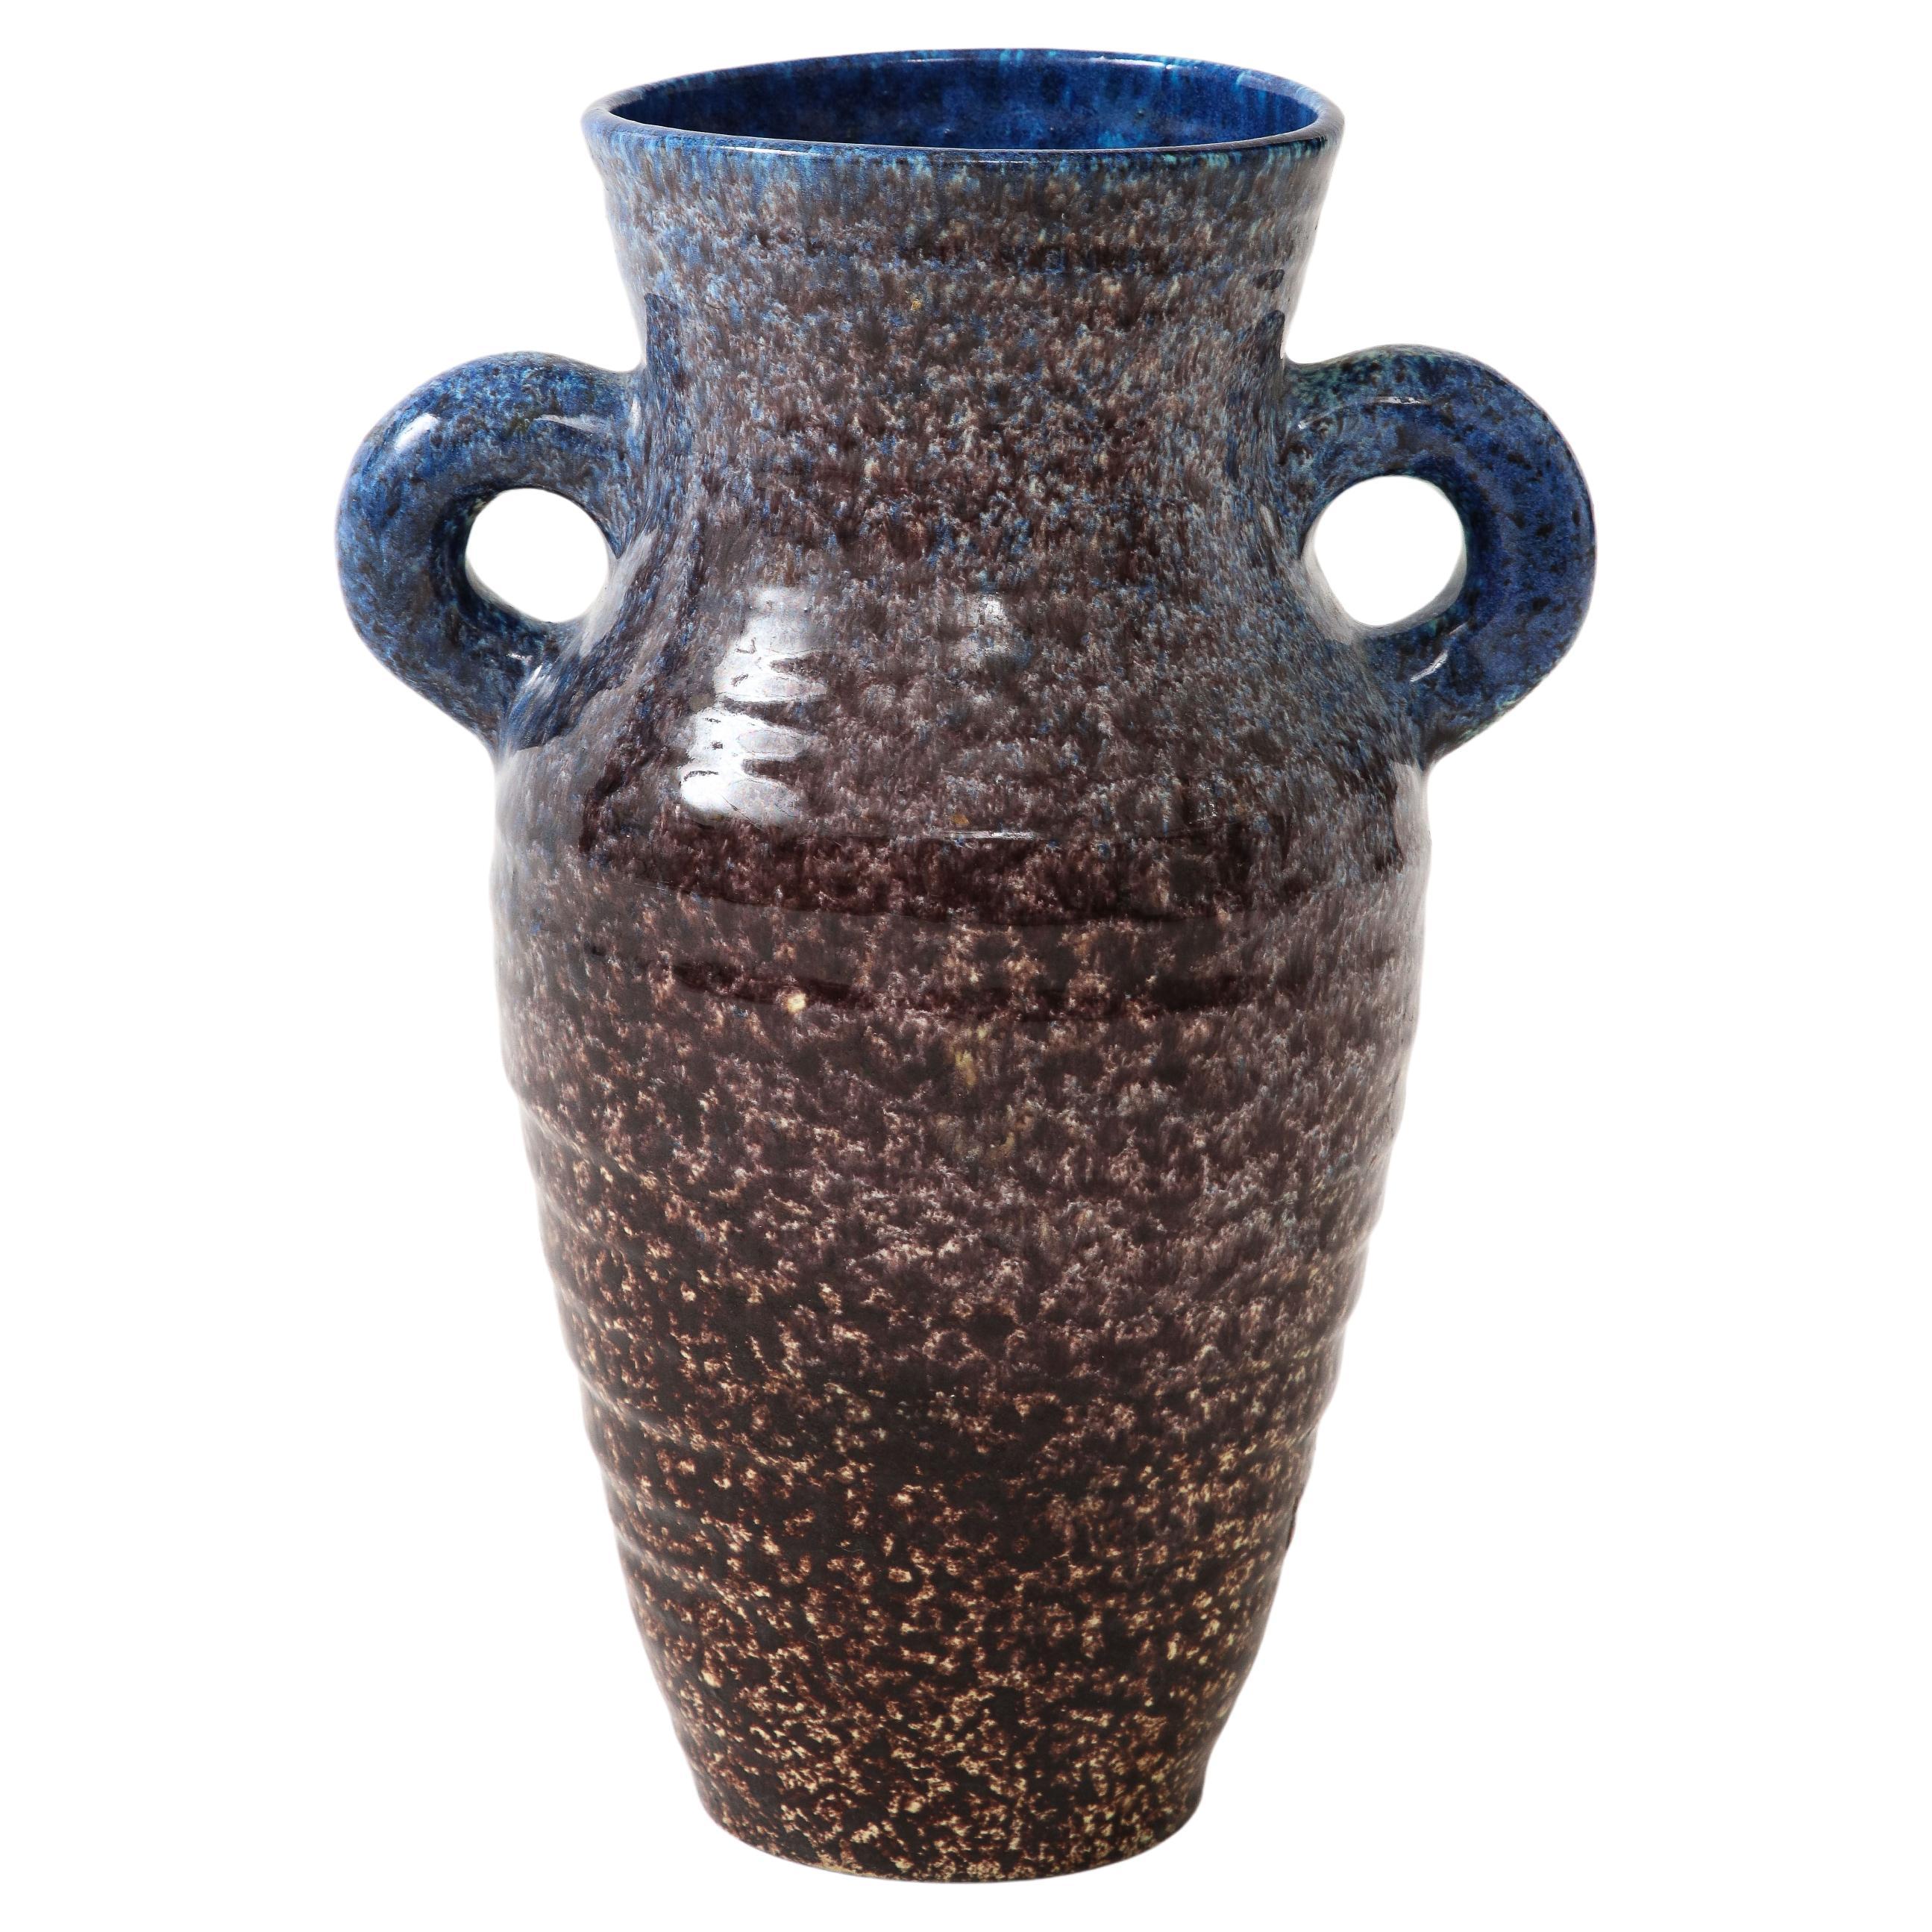 Ceramic Jug by Accolay Pottery